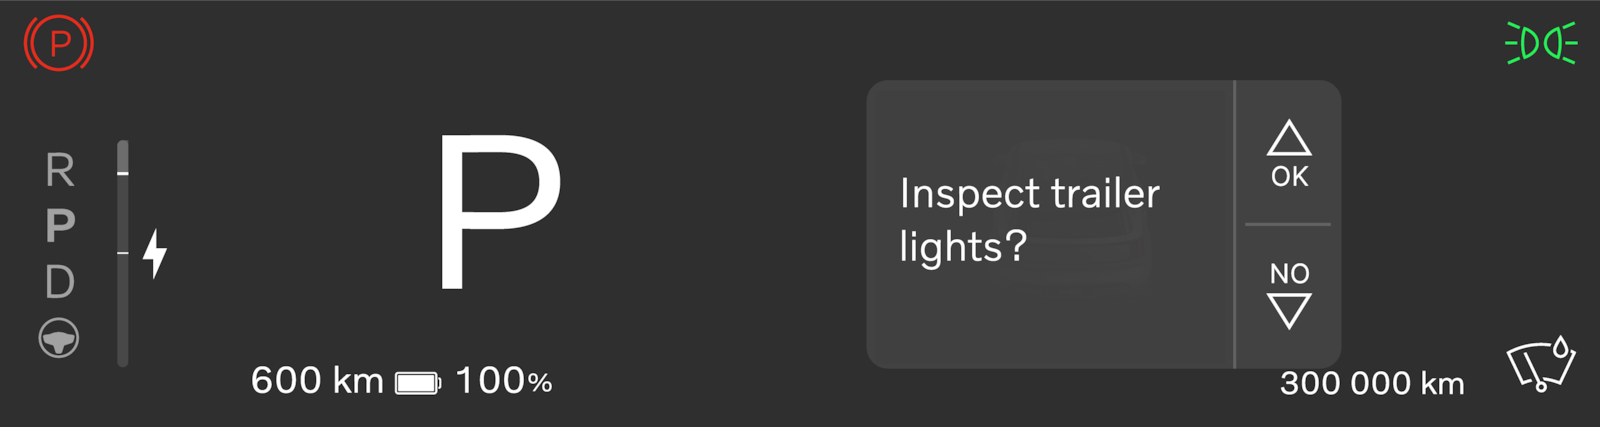 EX30-24w05-Latest info-Inspect trailer lights